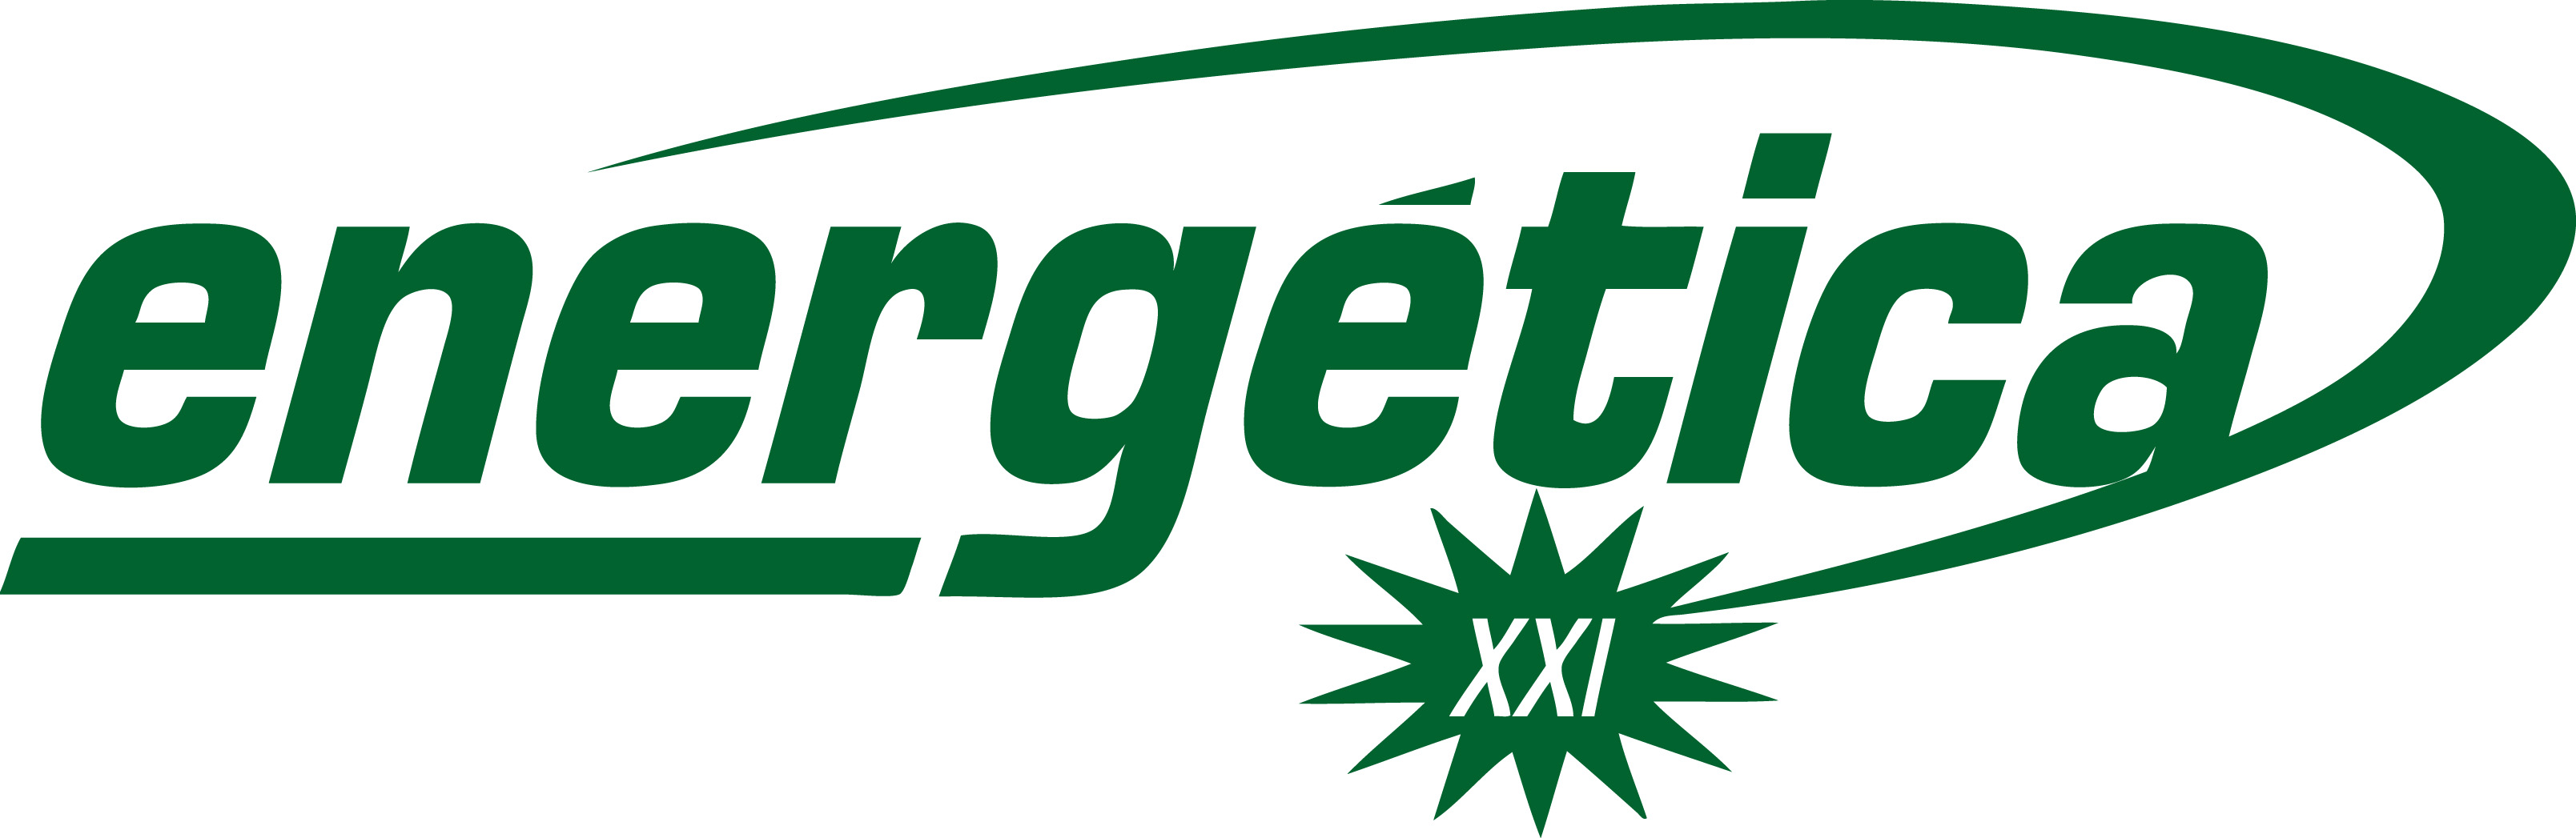 logo-energetica21 